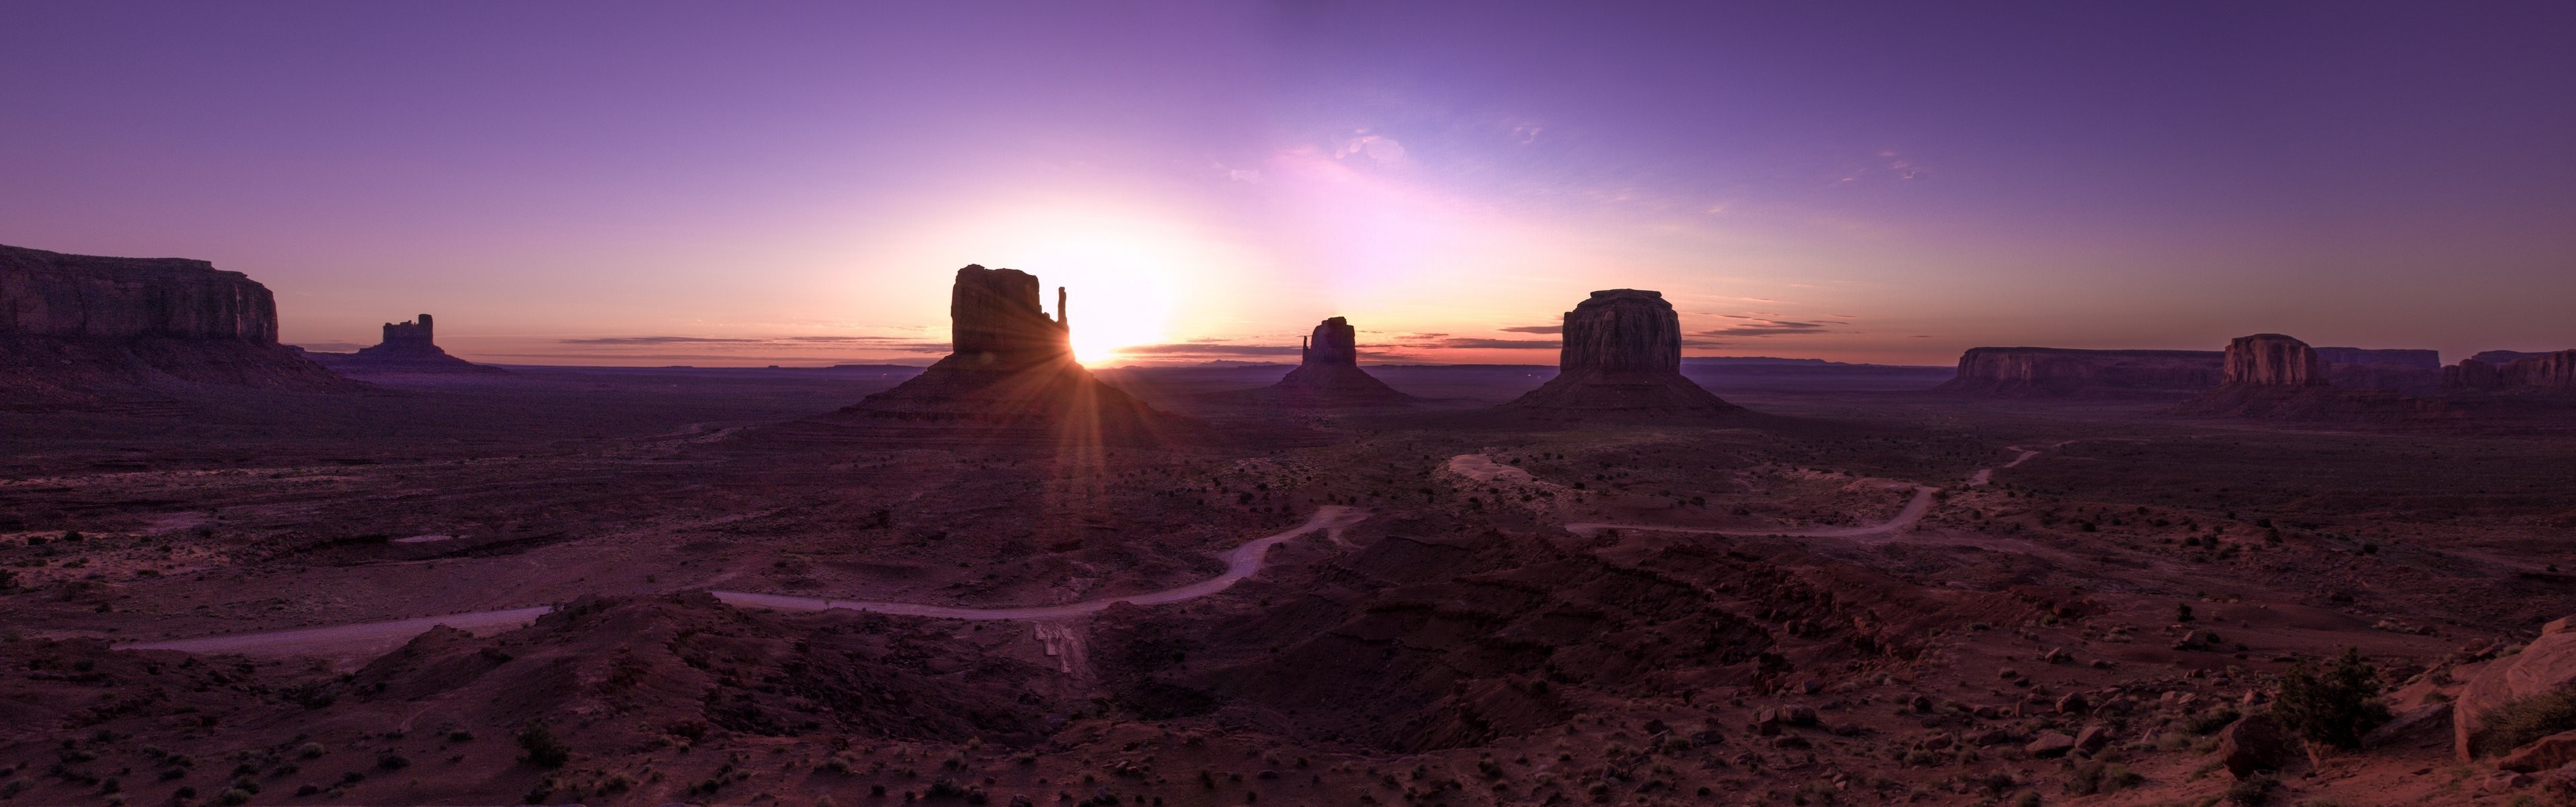 3831x1200 arizona monument valley landscape panorama desert valley mountain dawn